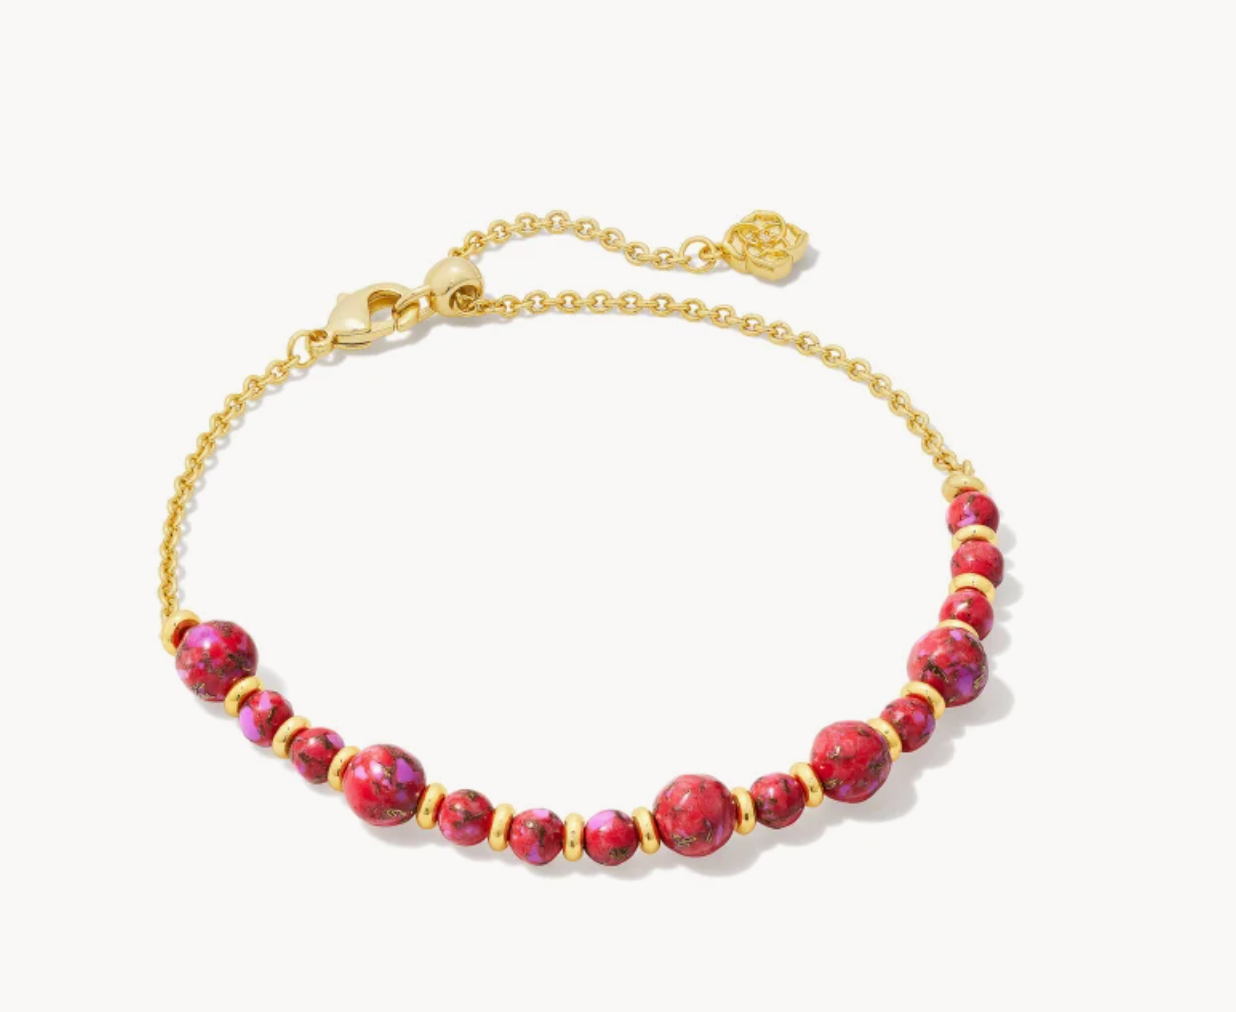 Kendra Scott Jovie Gold Beaded Delicate Chain Bracelet in Red Fuchsia